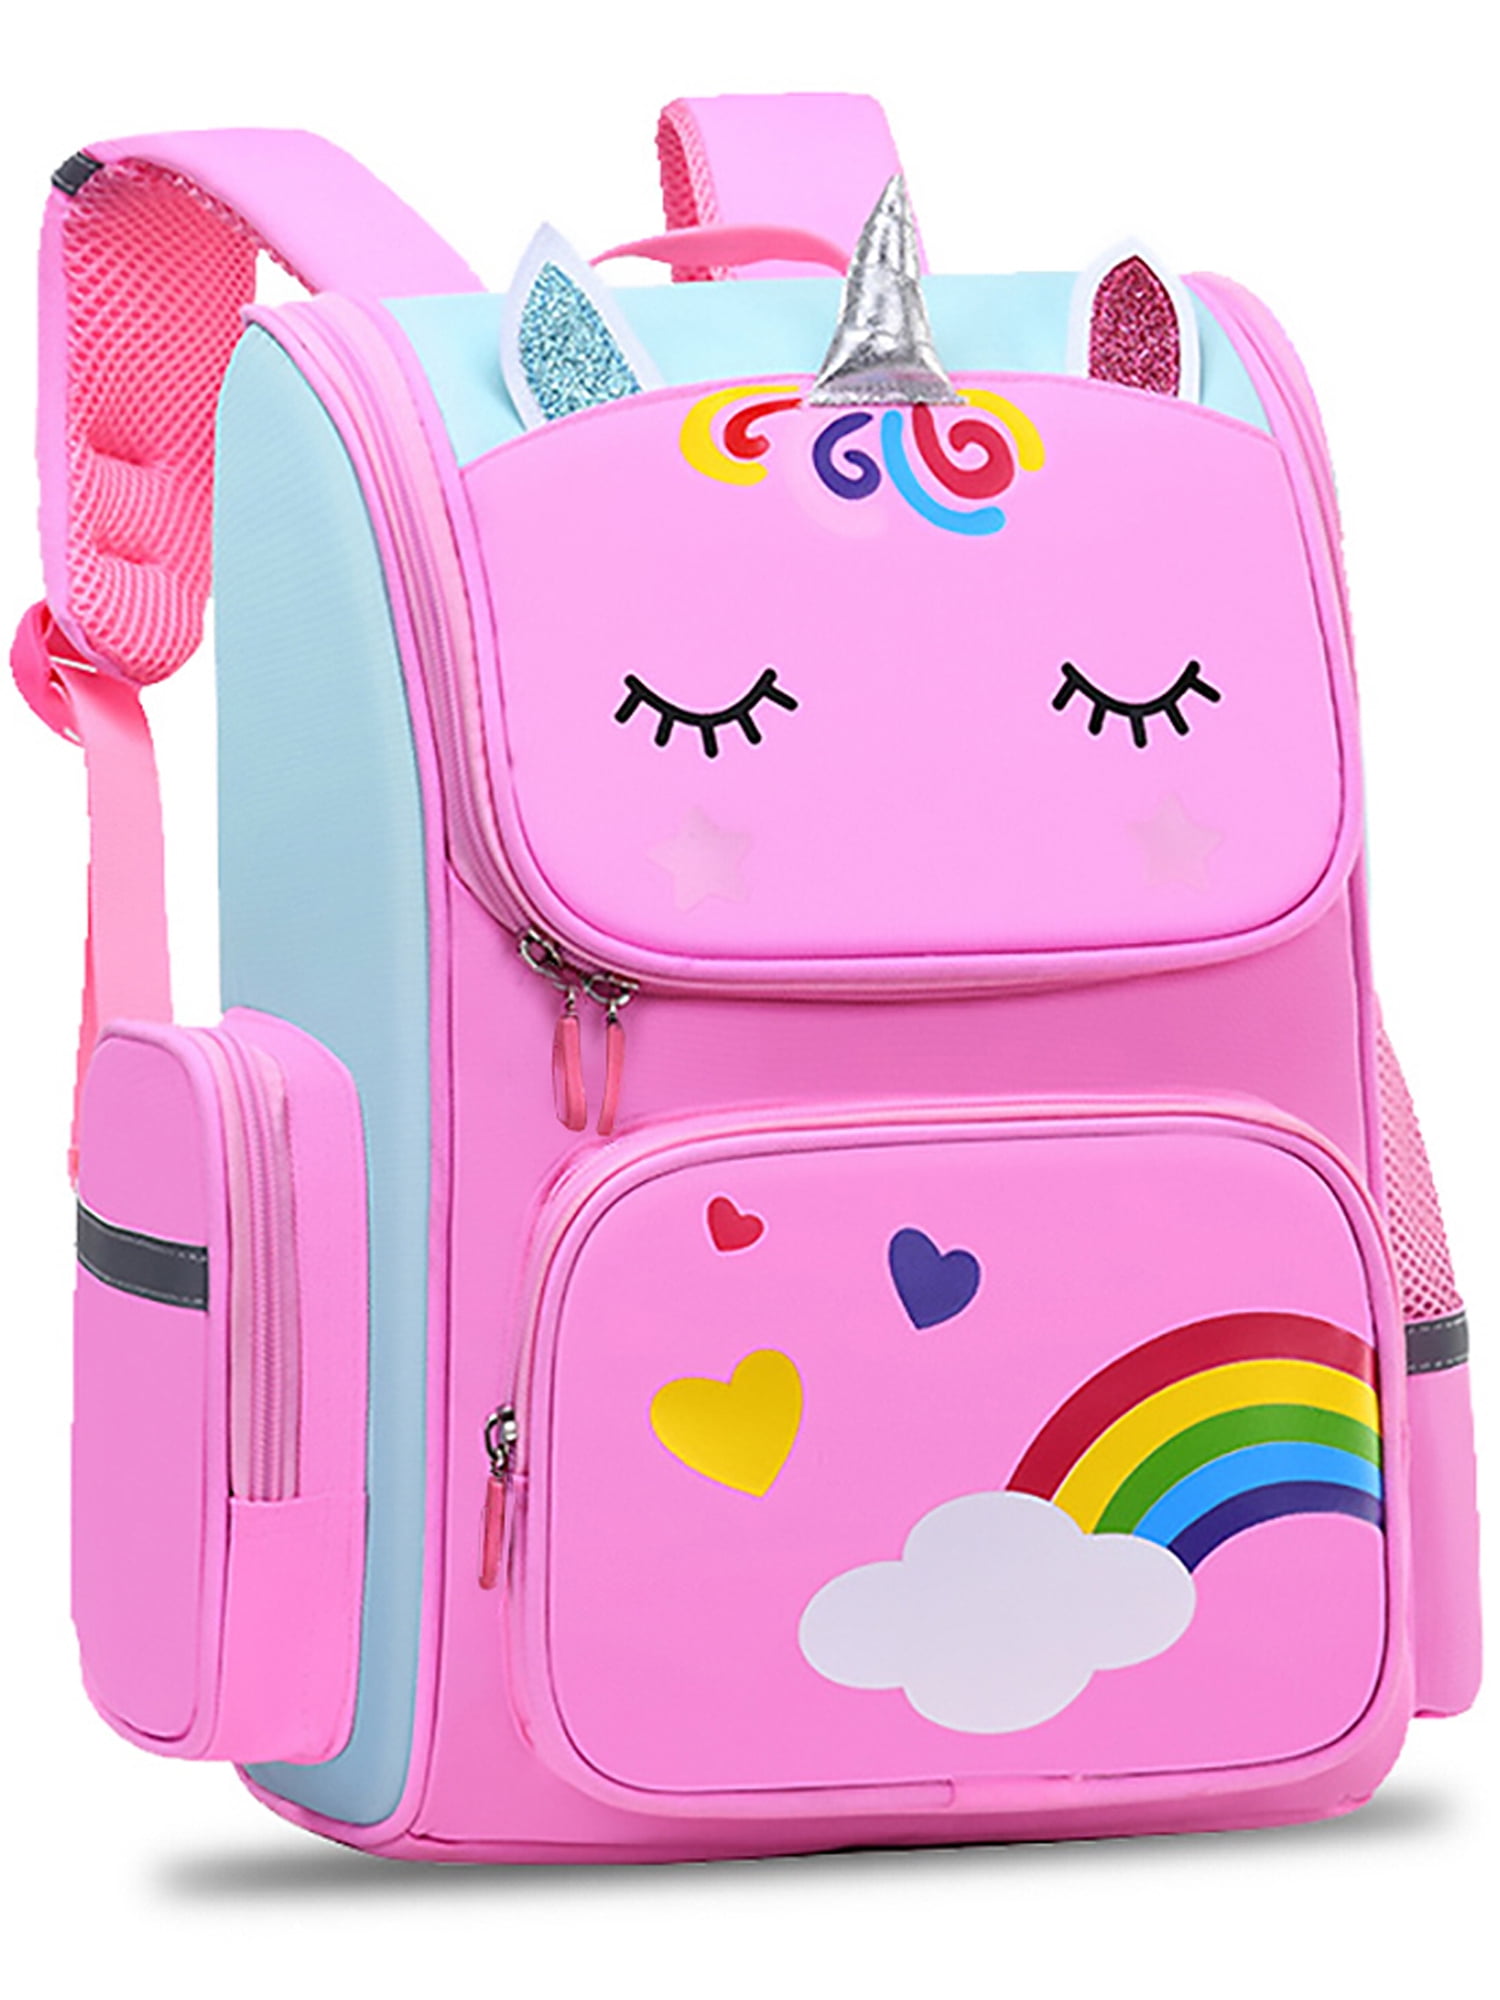 Barbie Beautiful Unicorn School Bag Pack Pink 16Inches 12Y